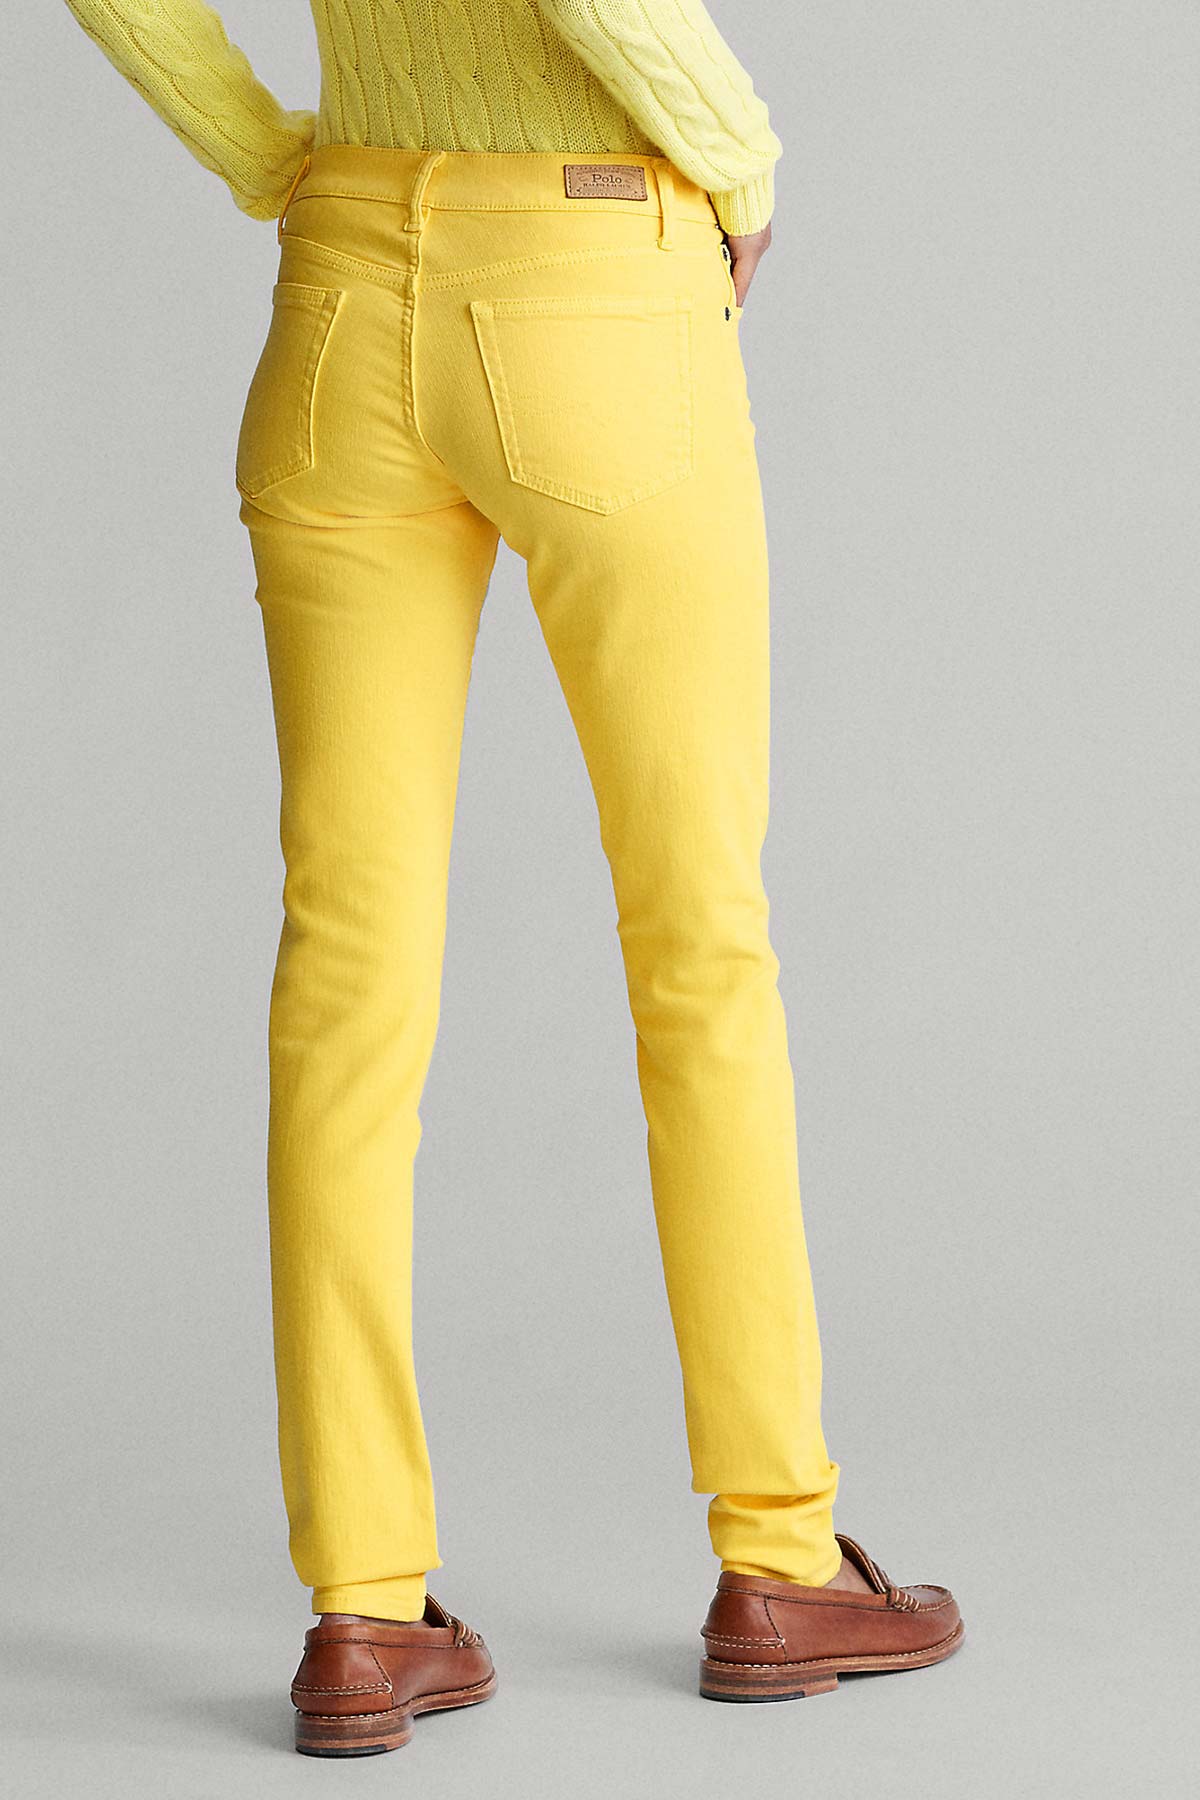 Polo Ralph Lauren Streç Skinny Jeans-Libas Trendy Fashion Store